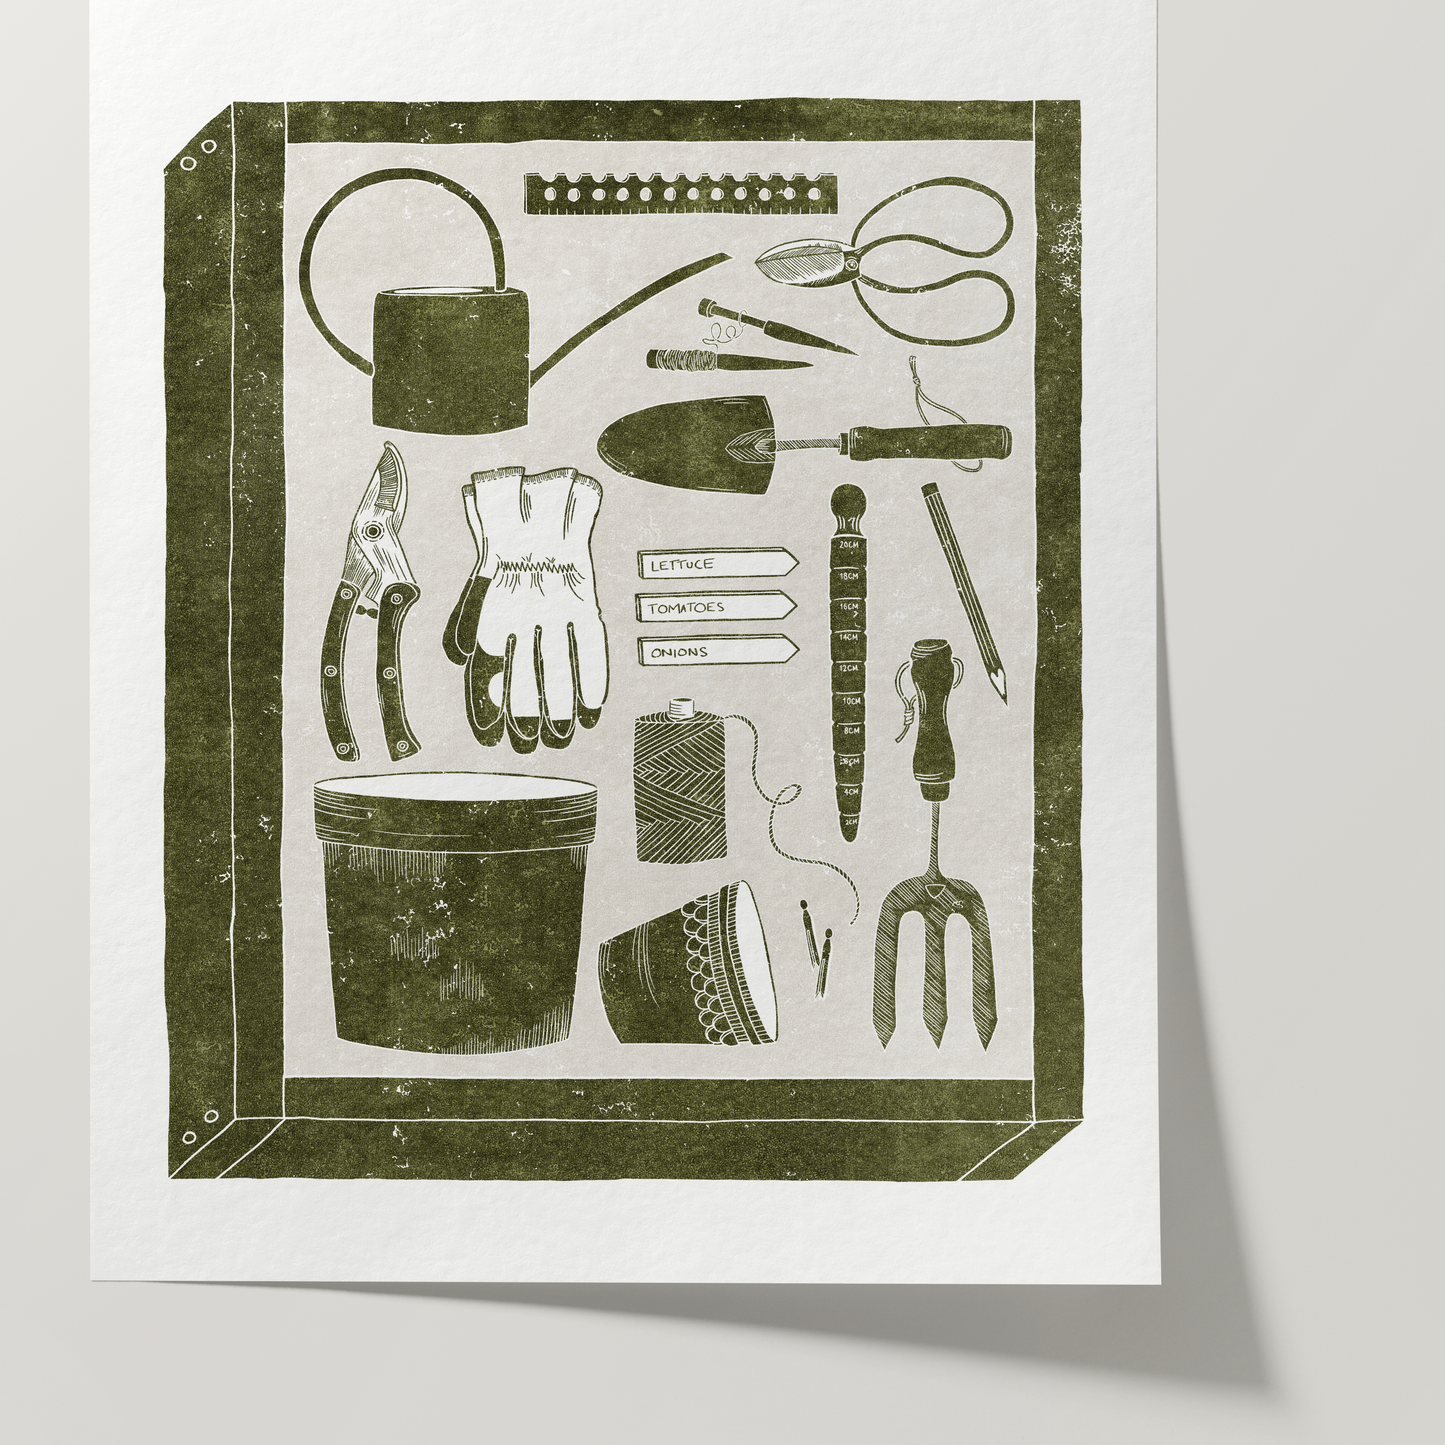 Home Decor Print - Nature-inspired Prints - Garden Tools - Framed - Linocut Effect Illustration - Green - Hahnemühle German Etching Paper